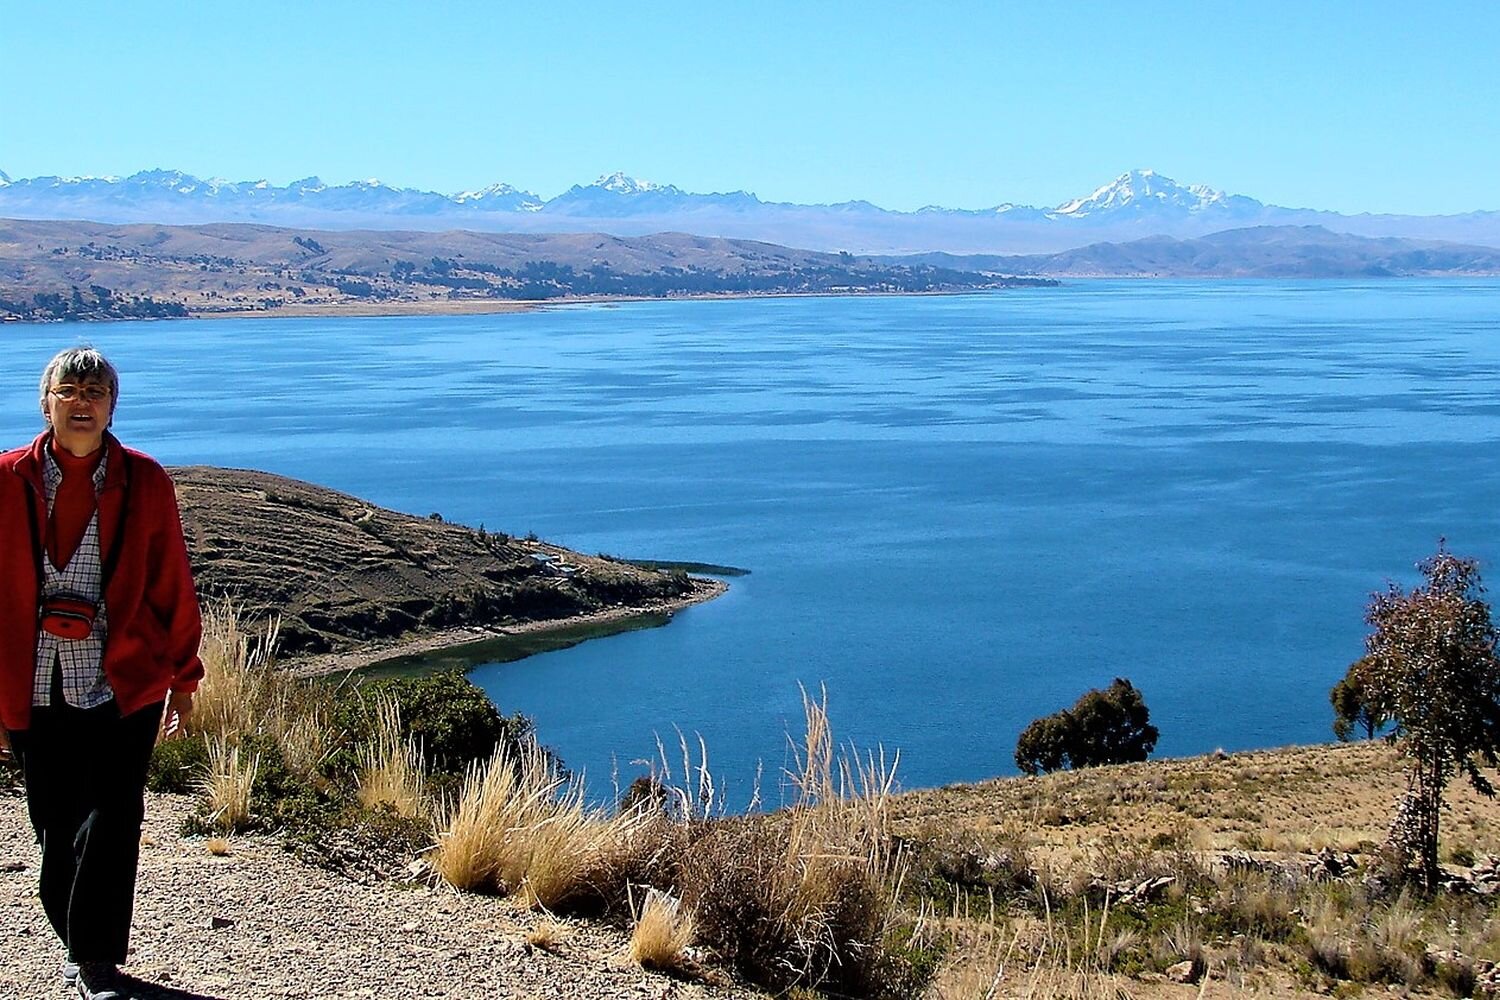  Lake Titicaca with Cordillera Real in the background. Bolivia. 